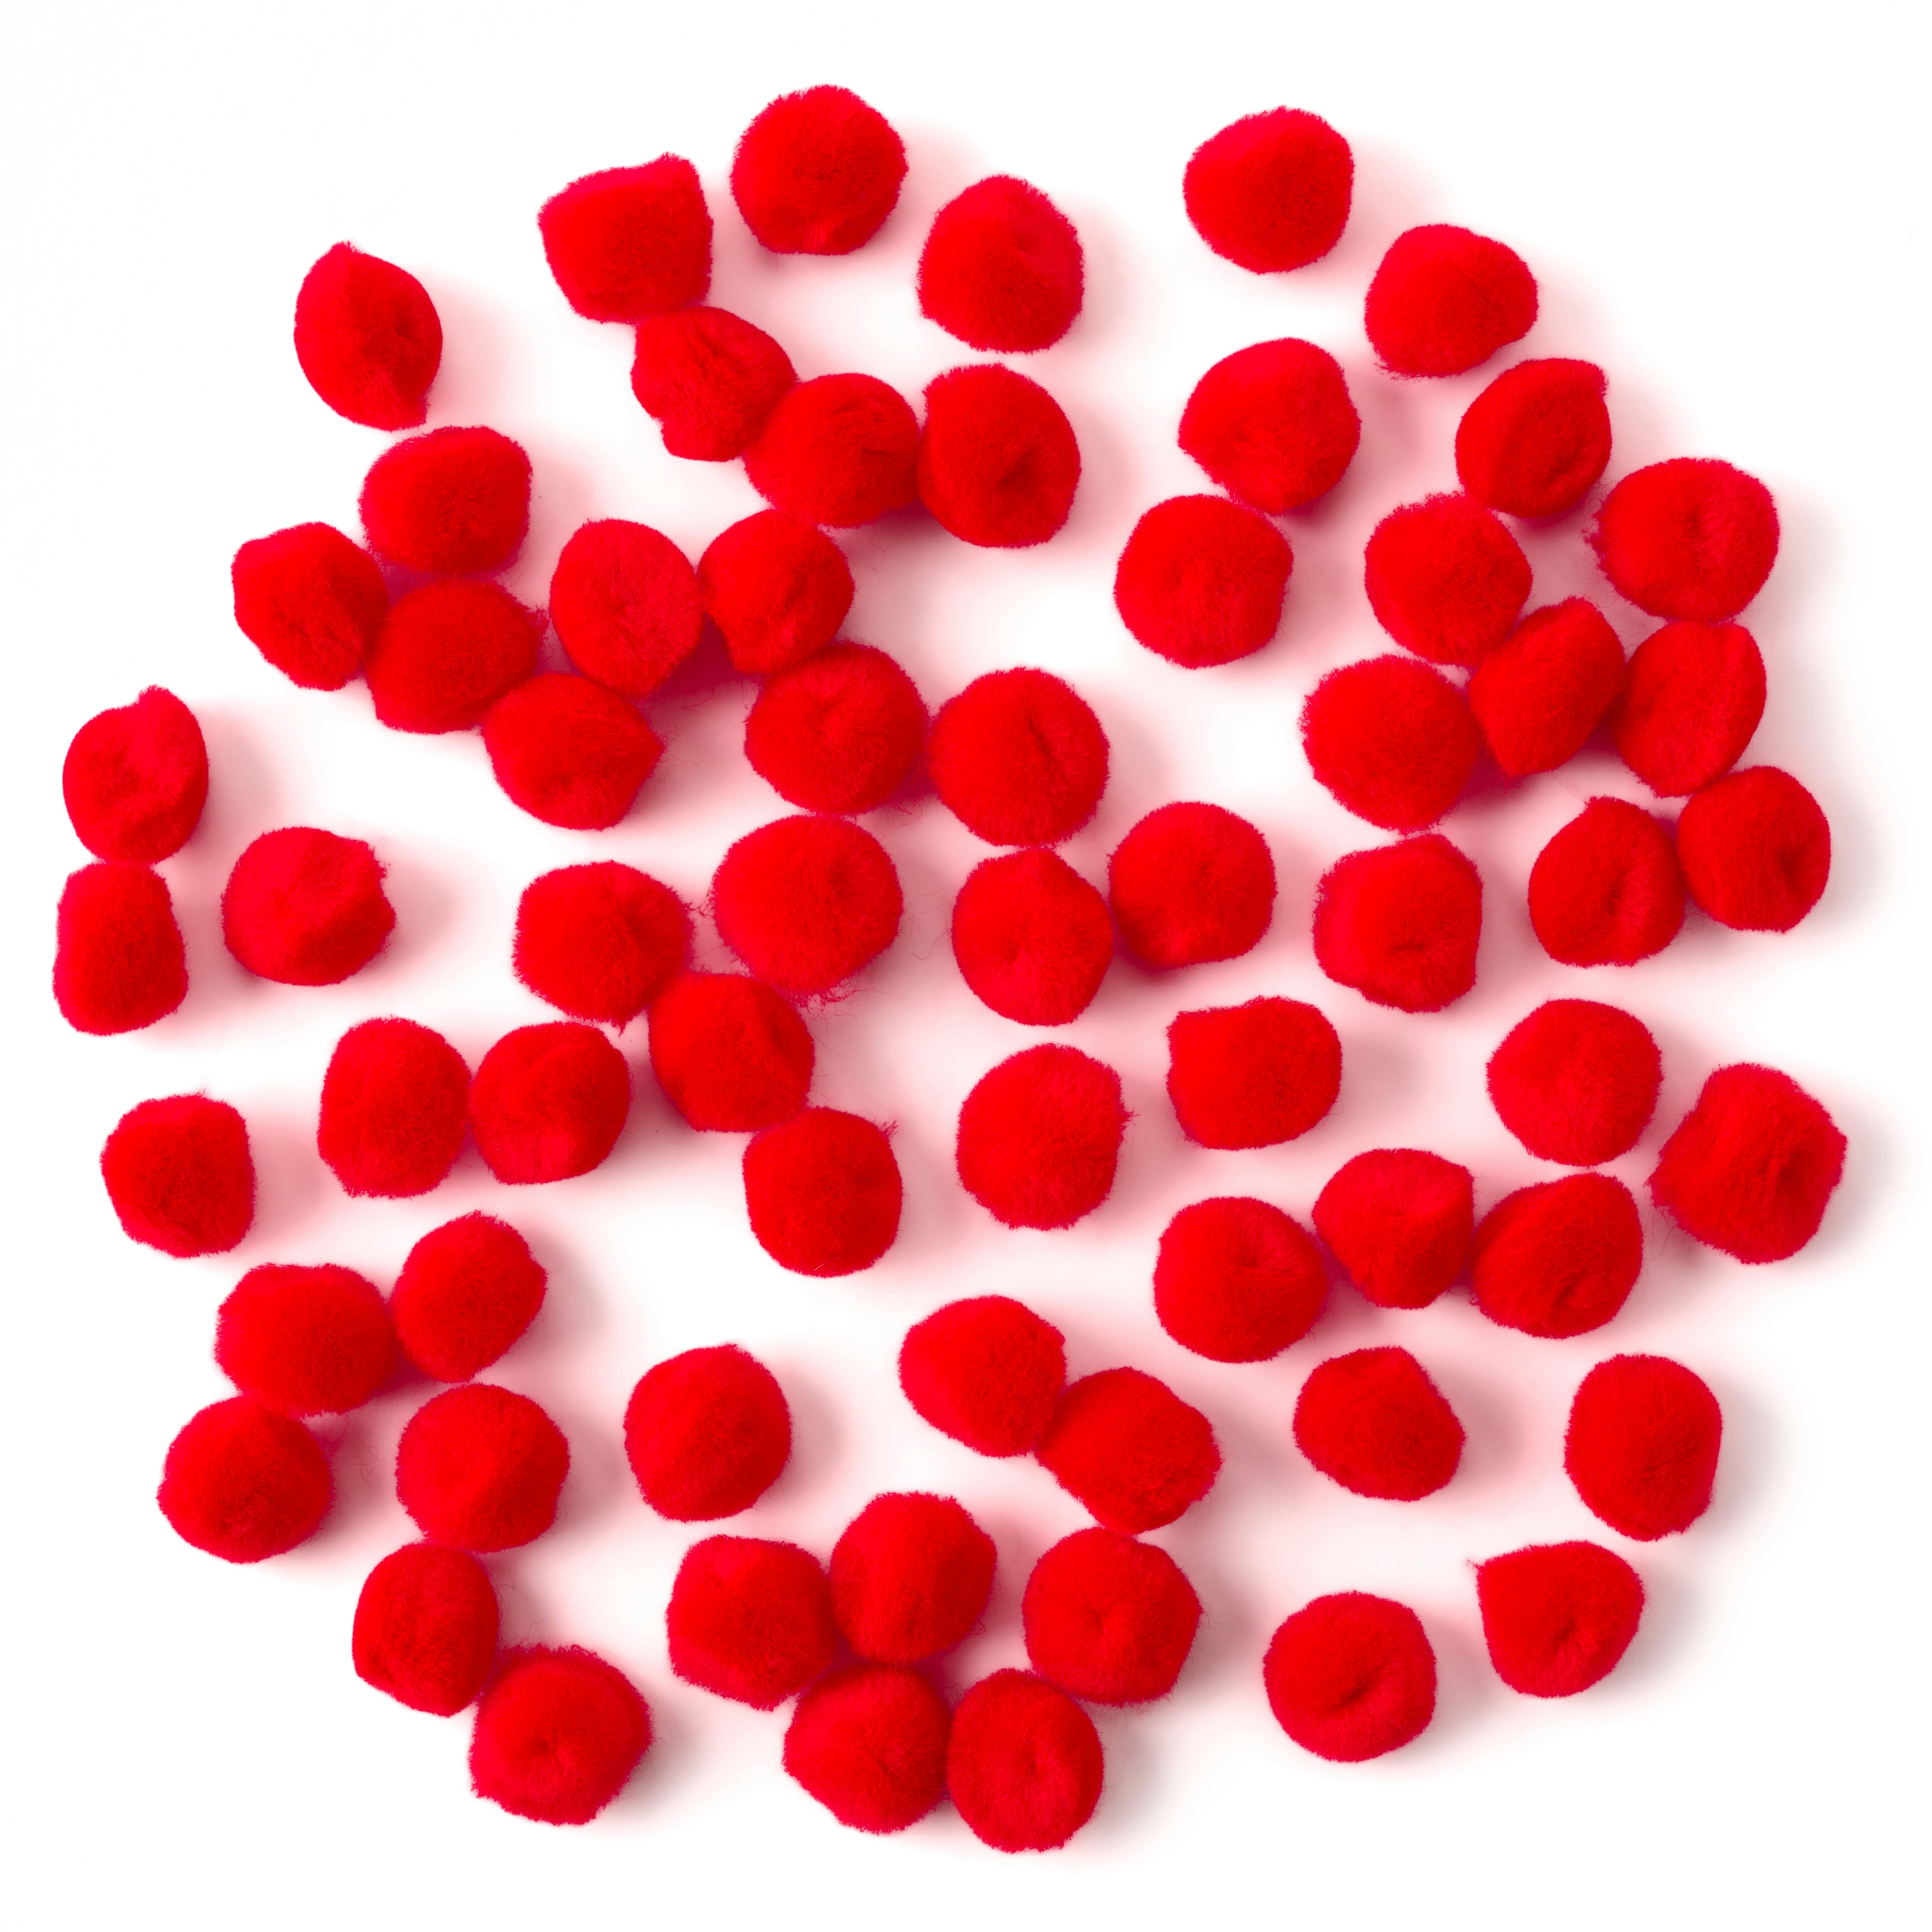 Red pom-poms balls 7 mms.